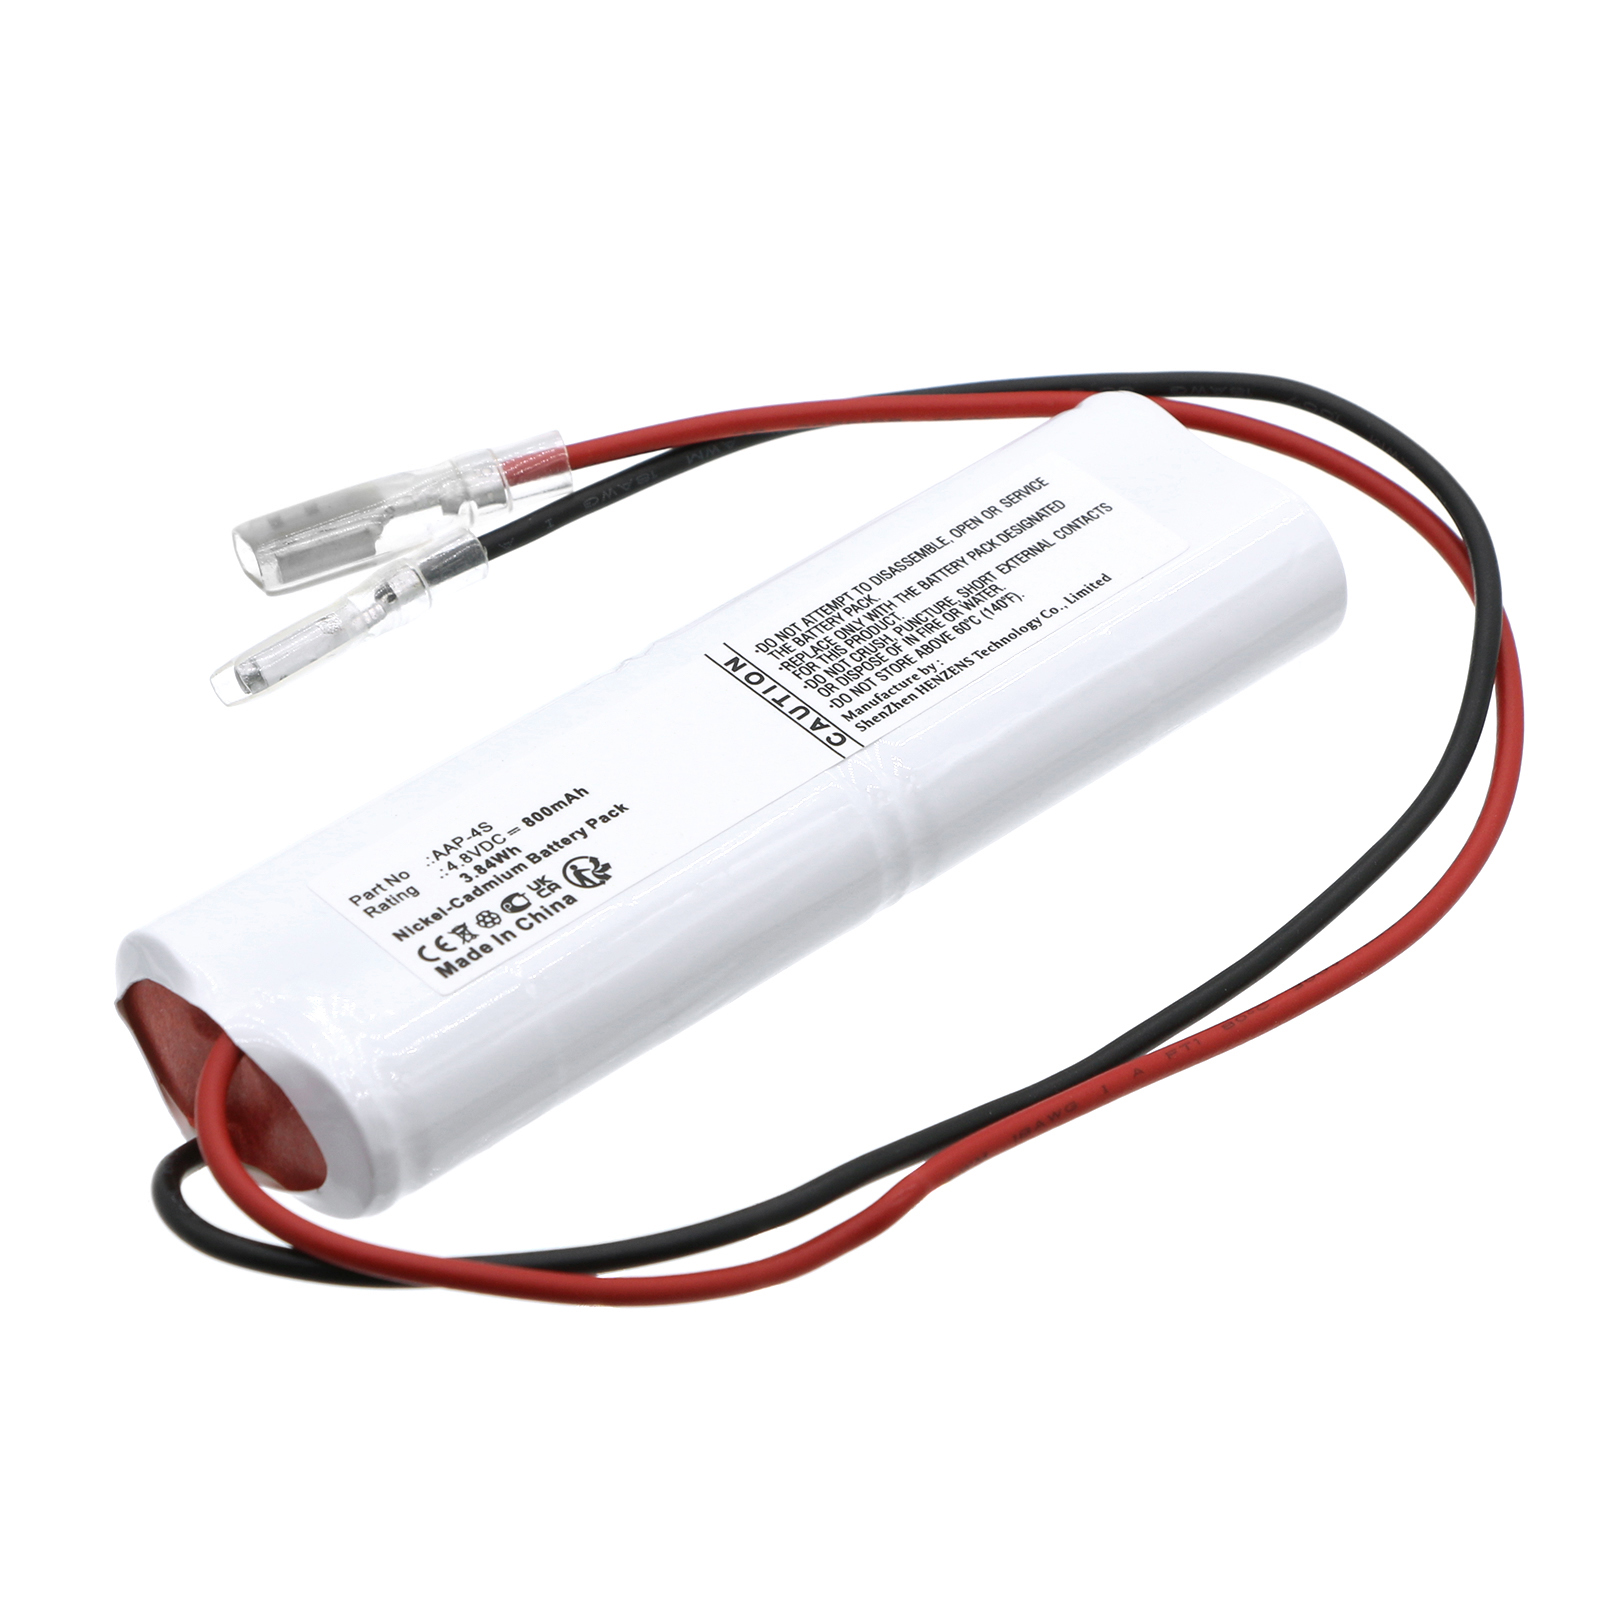 Synergy Digital Emergency Lighting Battery, Compatible with GAZ AAP-4S Emergency Lighting Battery (Ni-CD, 4.8V, 800mAh)